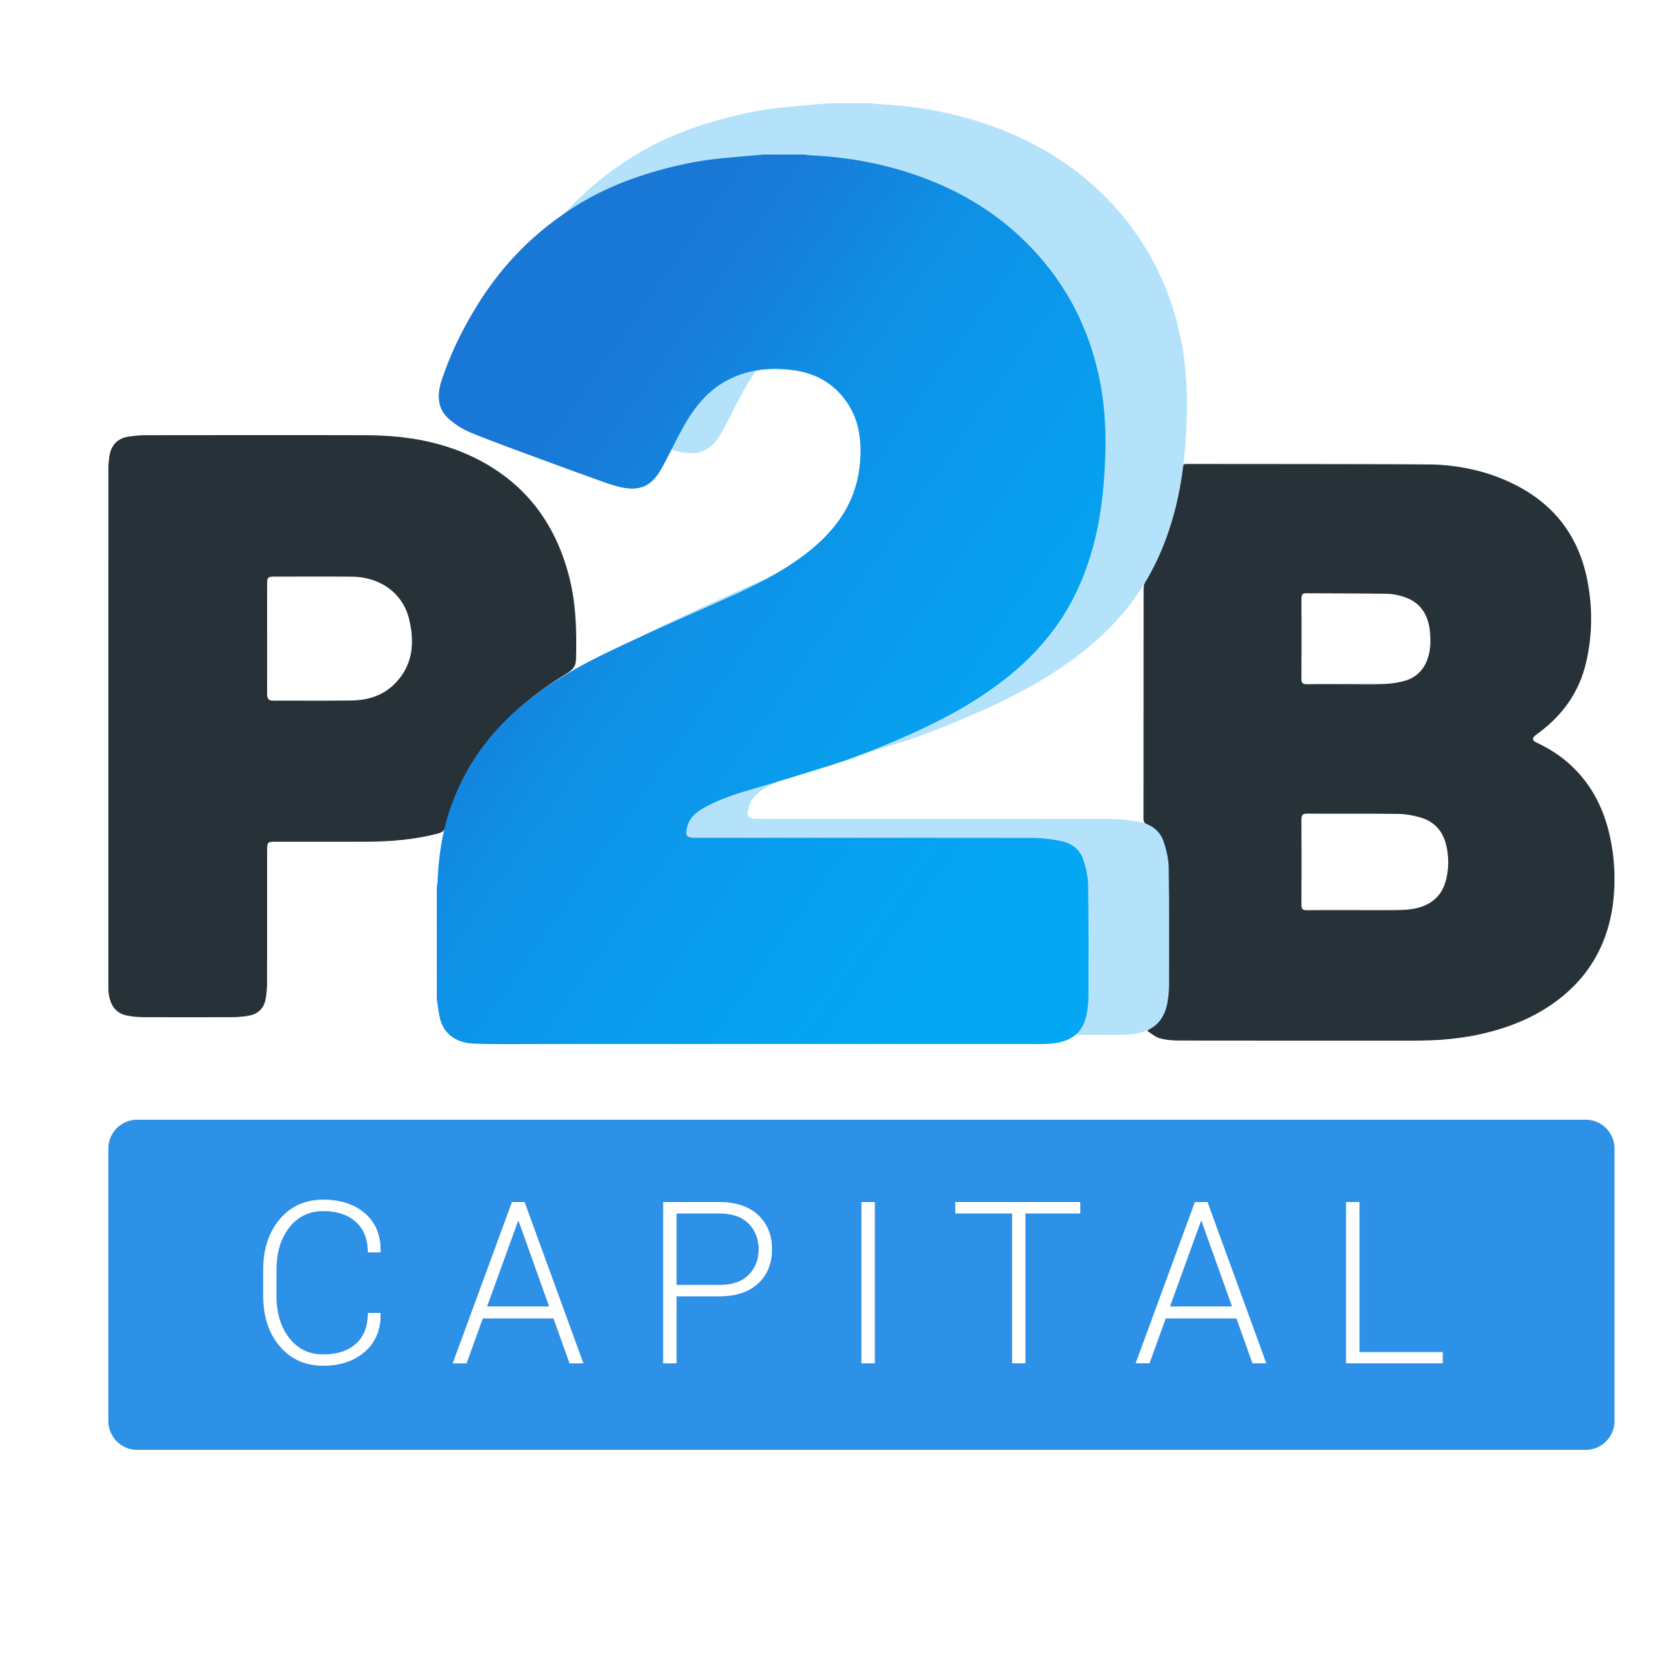 B 1 capital